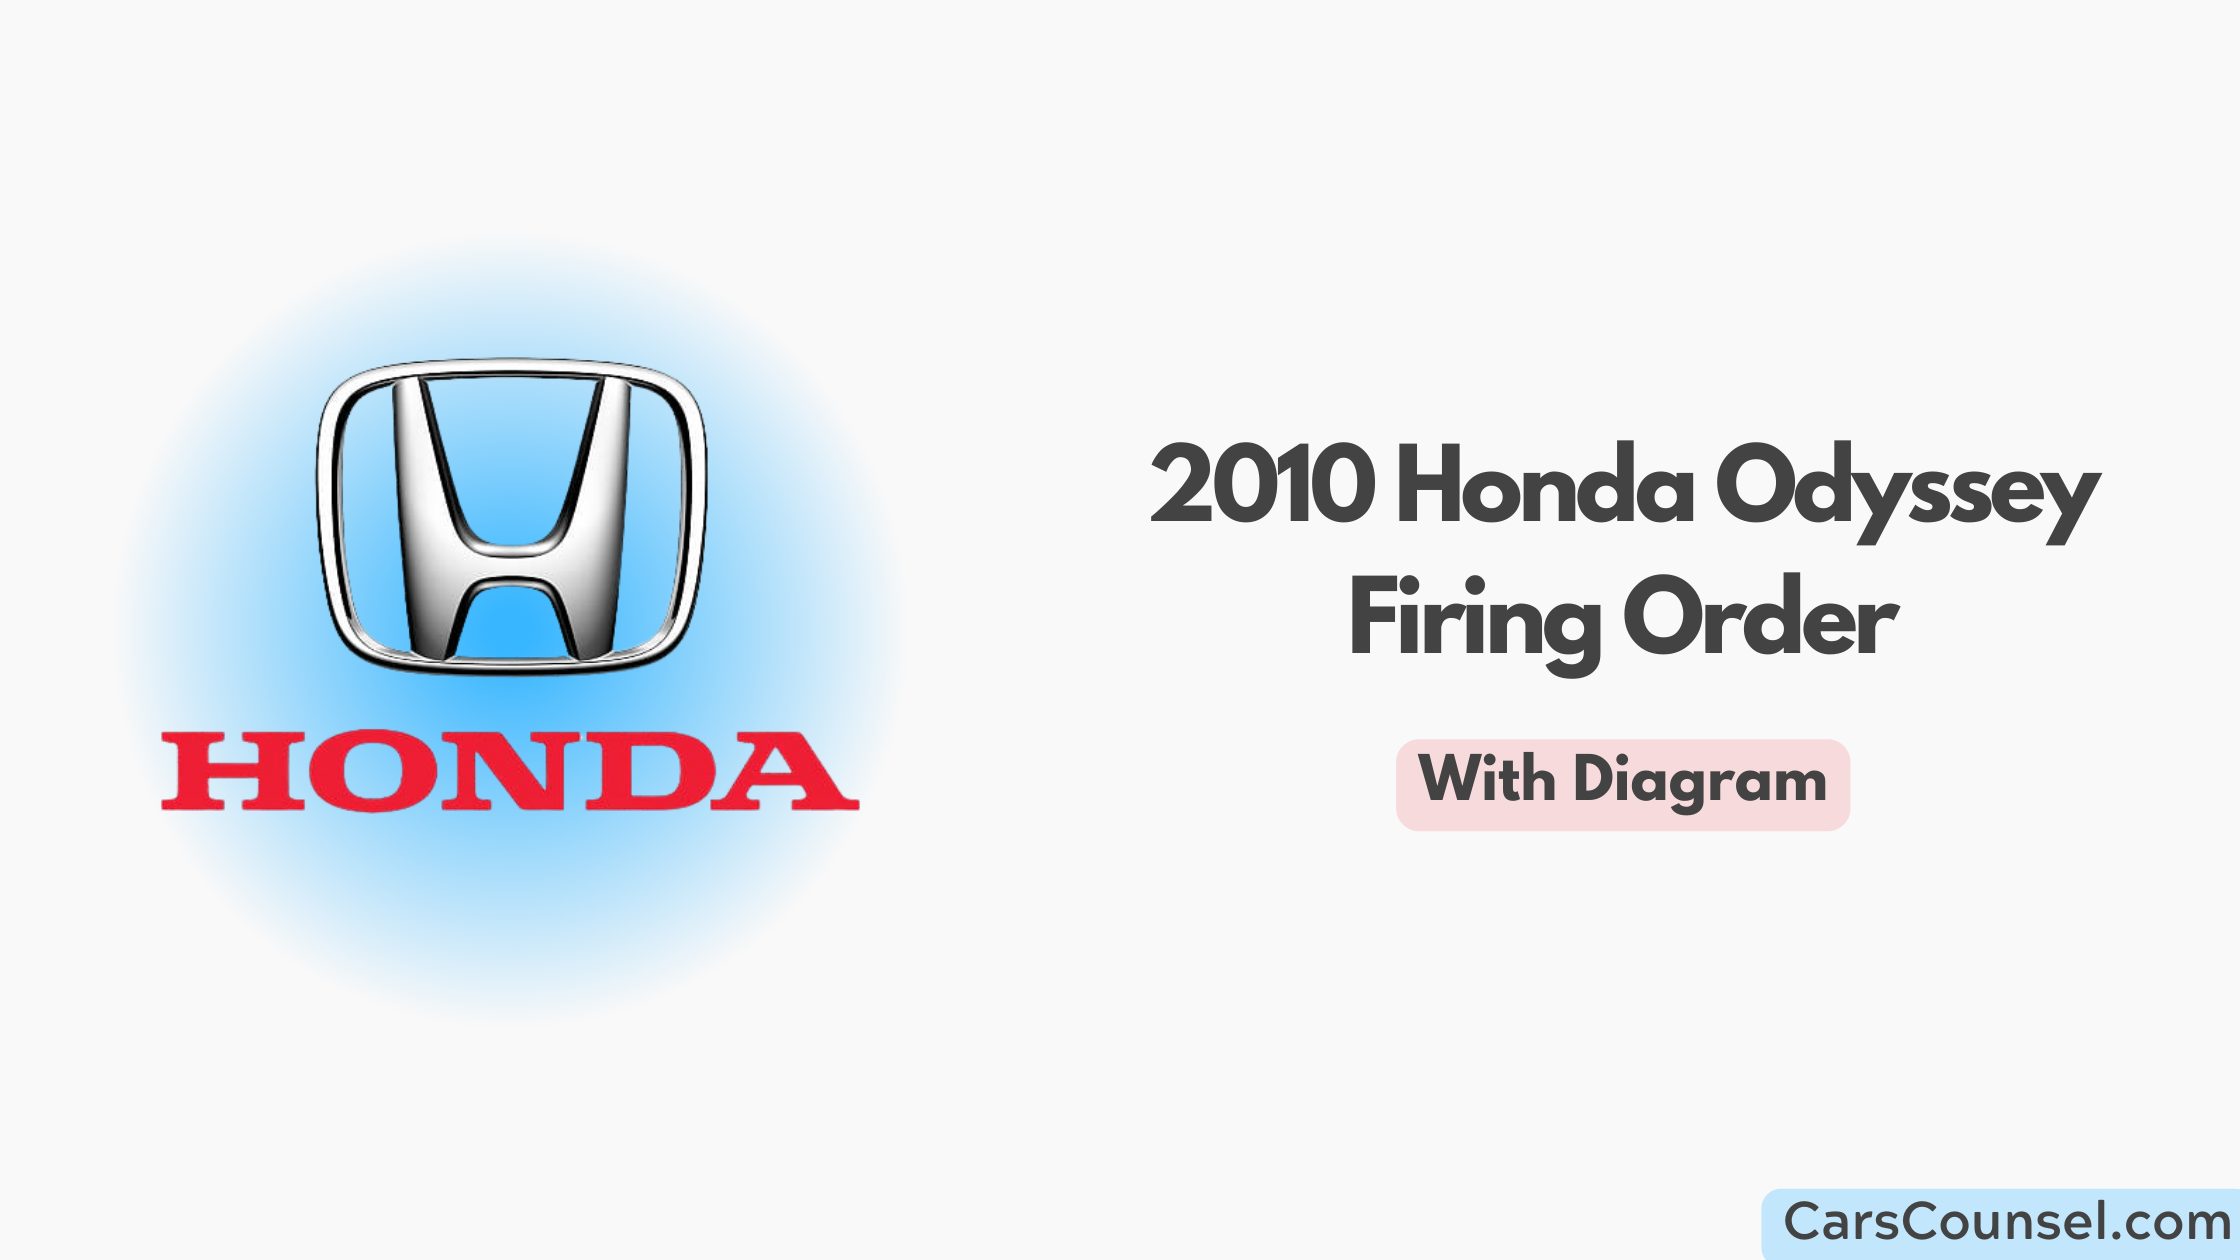 2010 Honda Odyssey Firing Order With Diagram